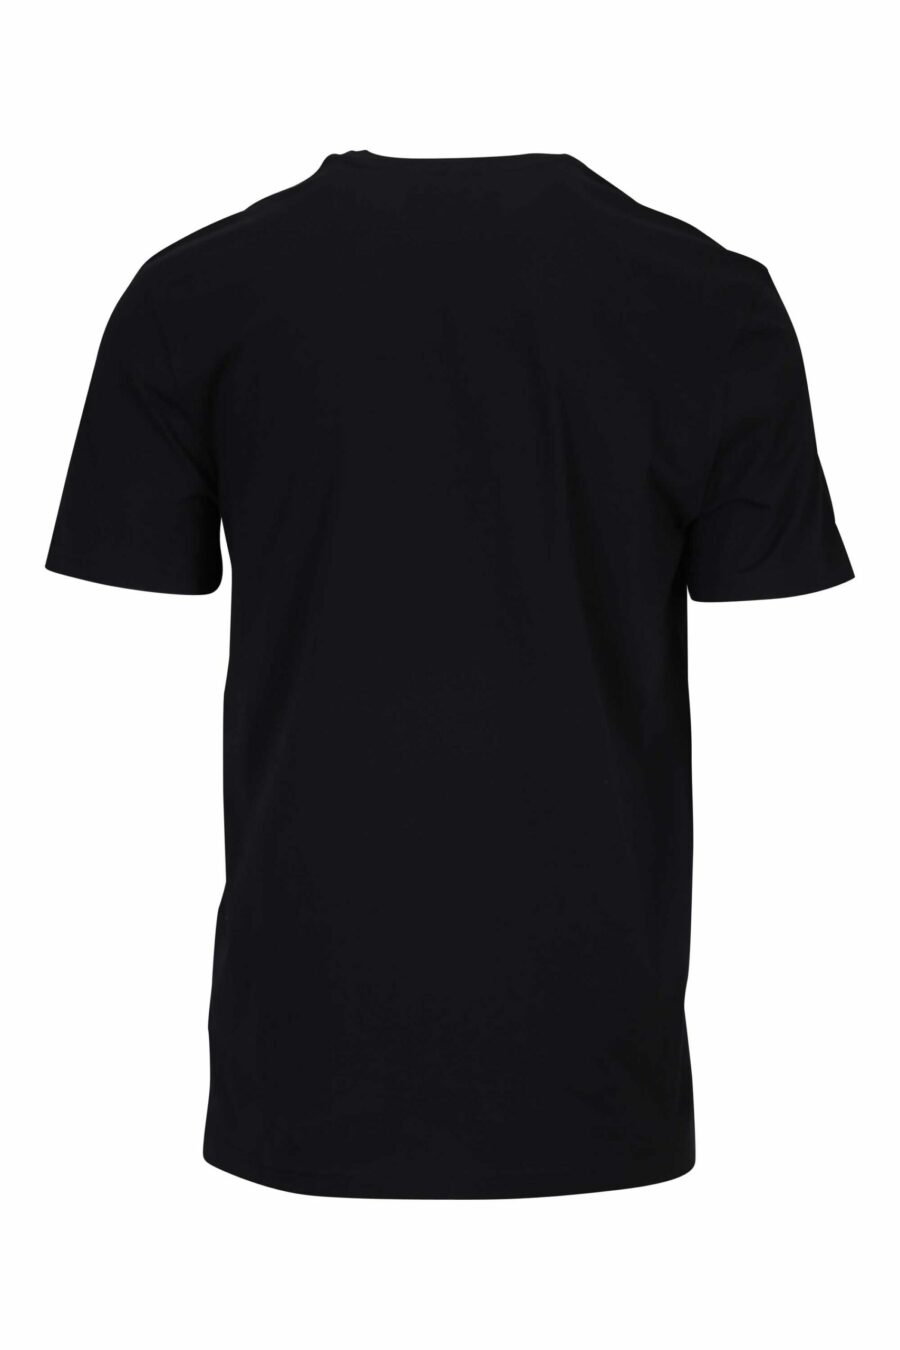 Black T-shirt with white mini-logo label - 667113394862 1 scaled